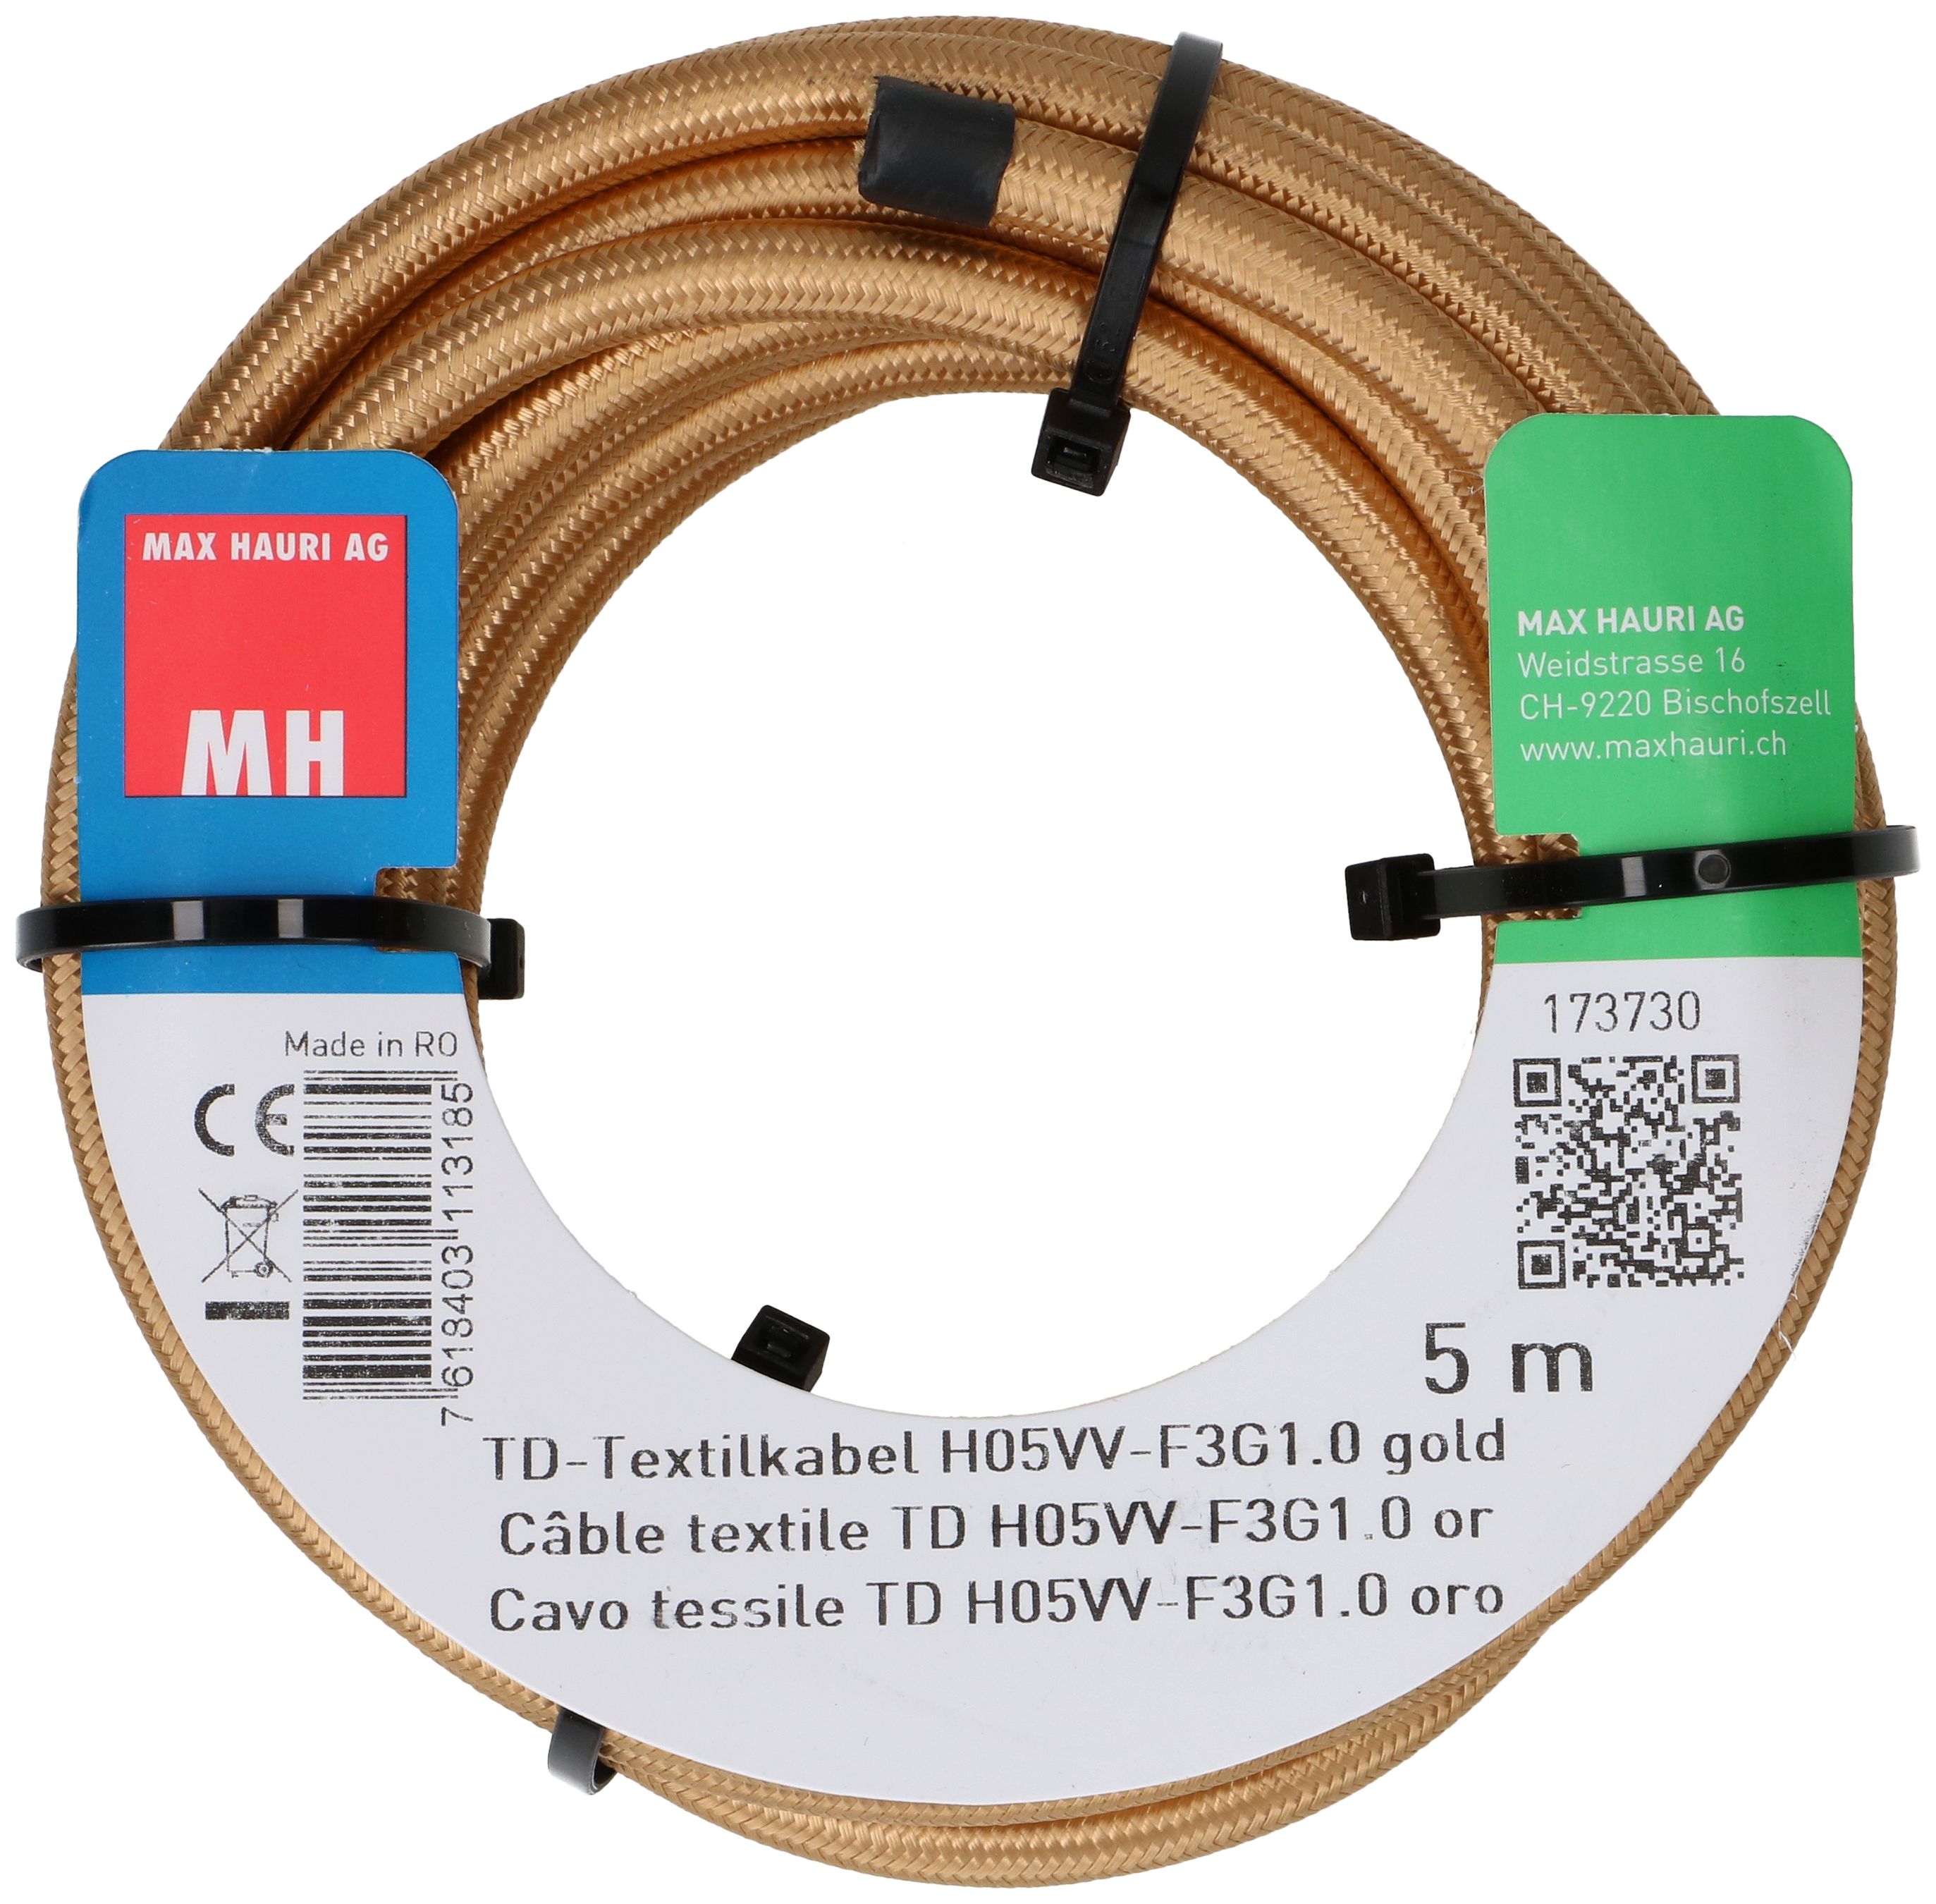 câble textile TD H05VV-F3G1.0 5m or